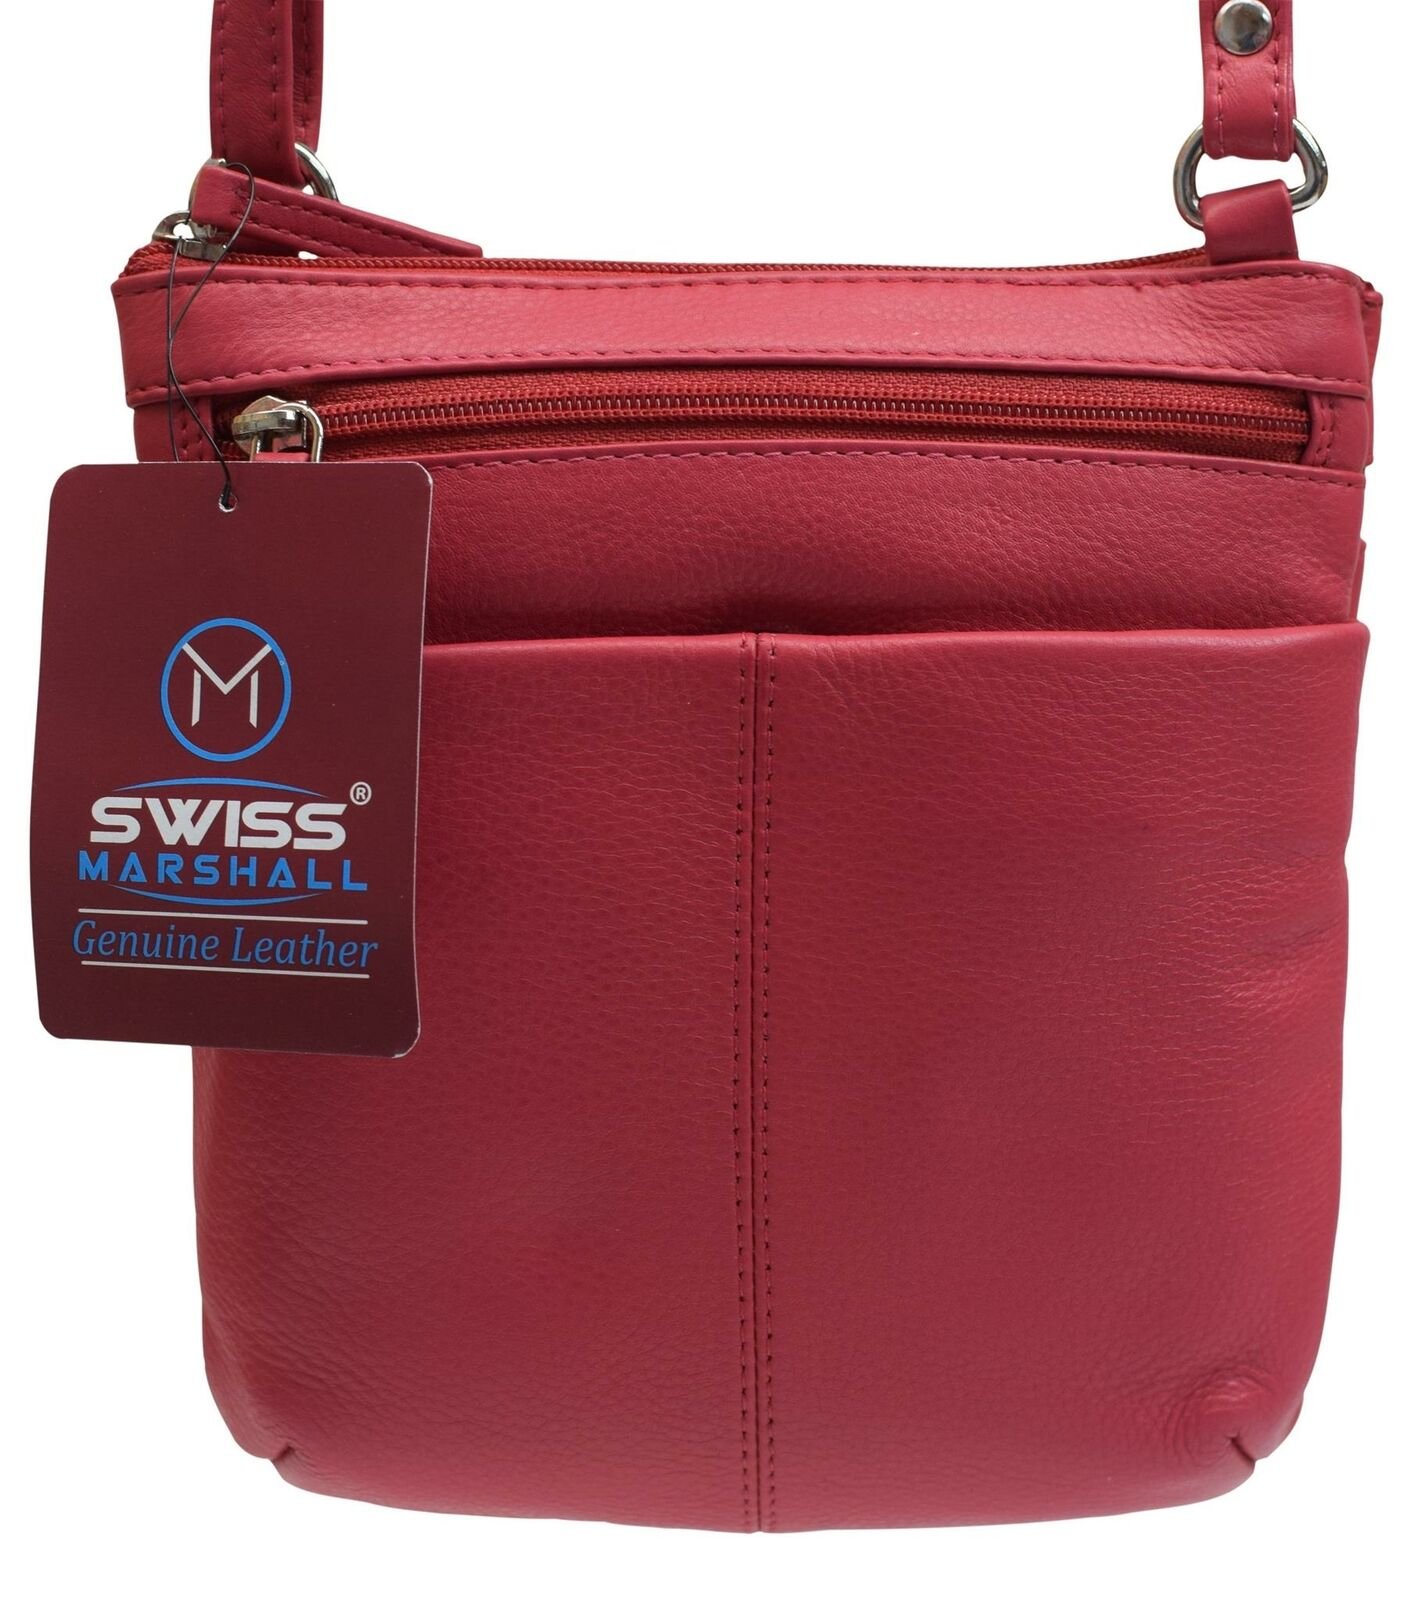 Swiss Marshall Luxury Women's Quality Zipper Purse Handbag Genuine Leather Ladies Crossbody Shoulder Bag